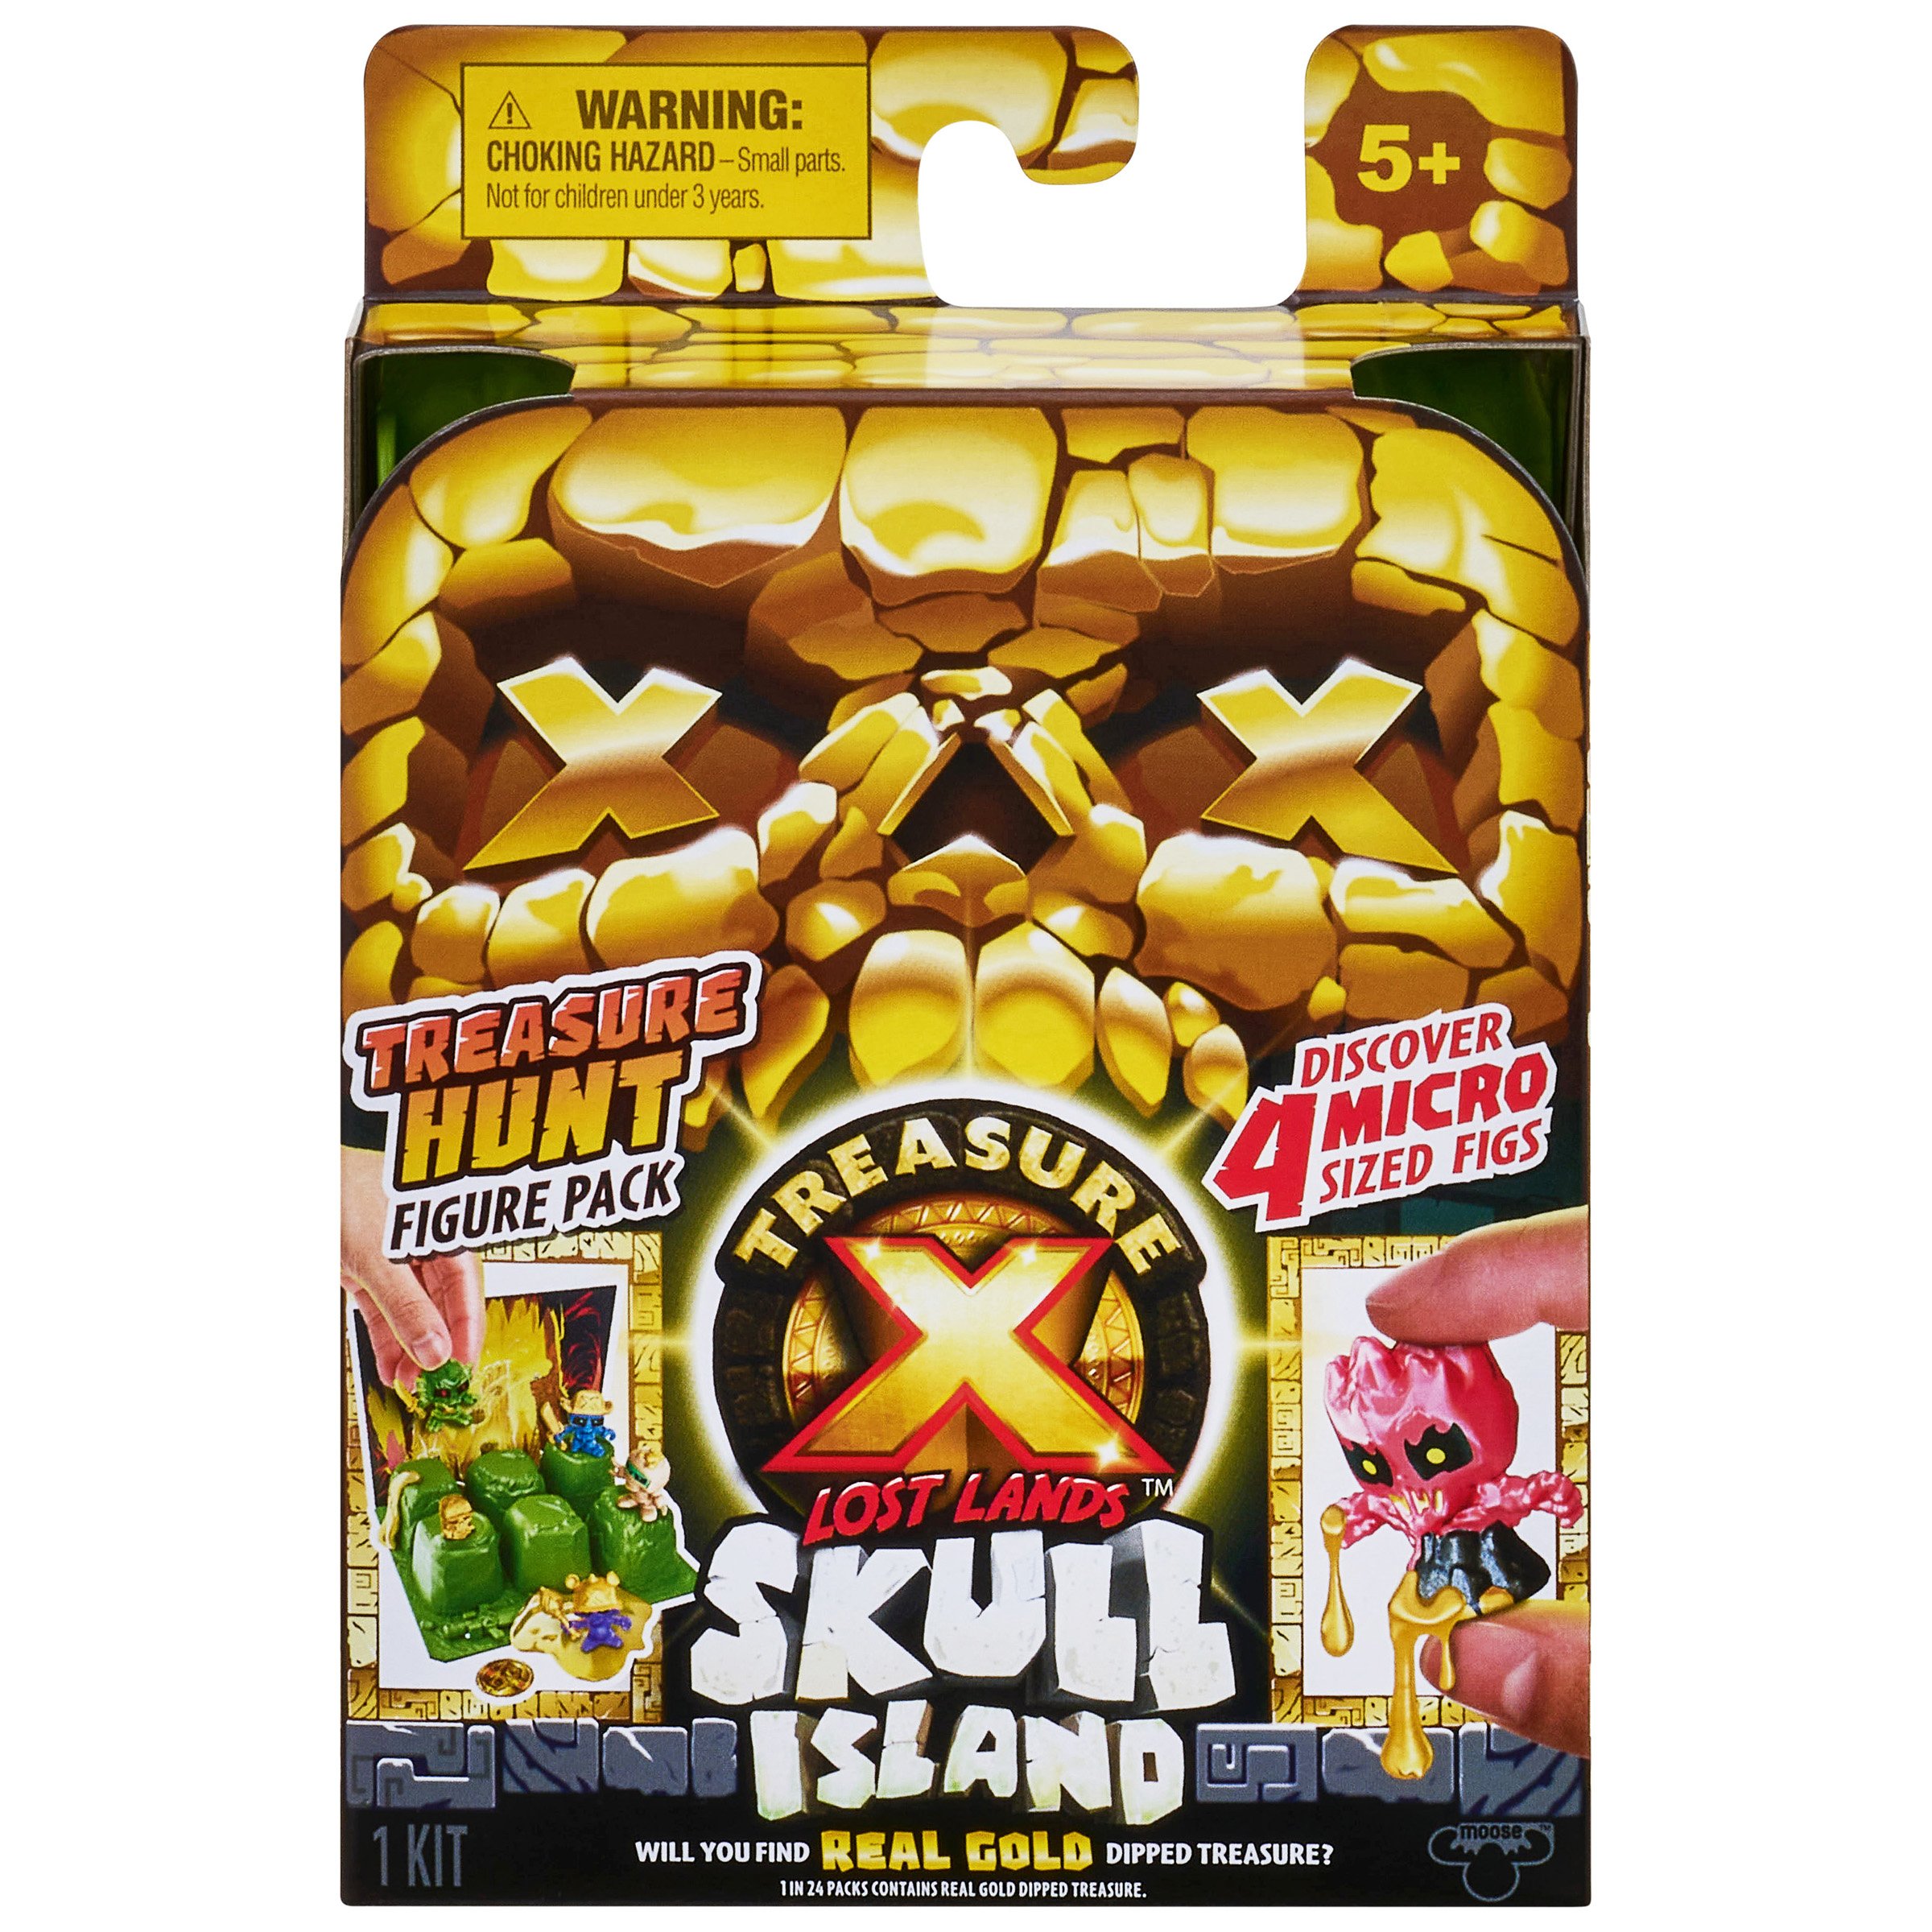 Treasure X Lost Lands Skull Island Treasure Hunt Micro Figure Pack Shop Playsets At H E B